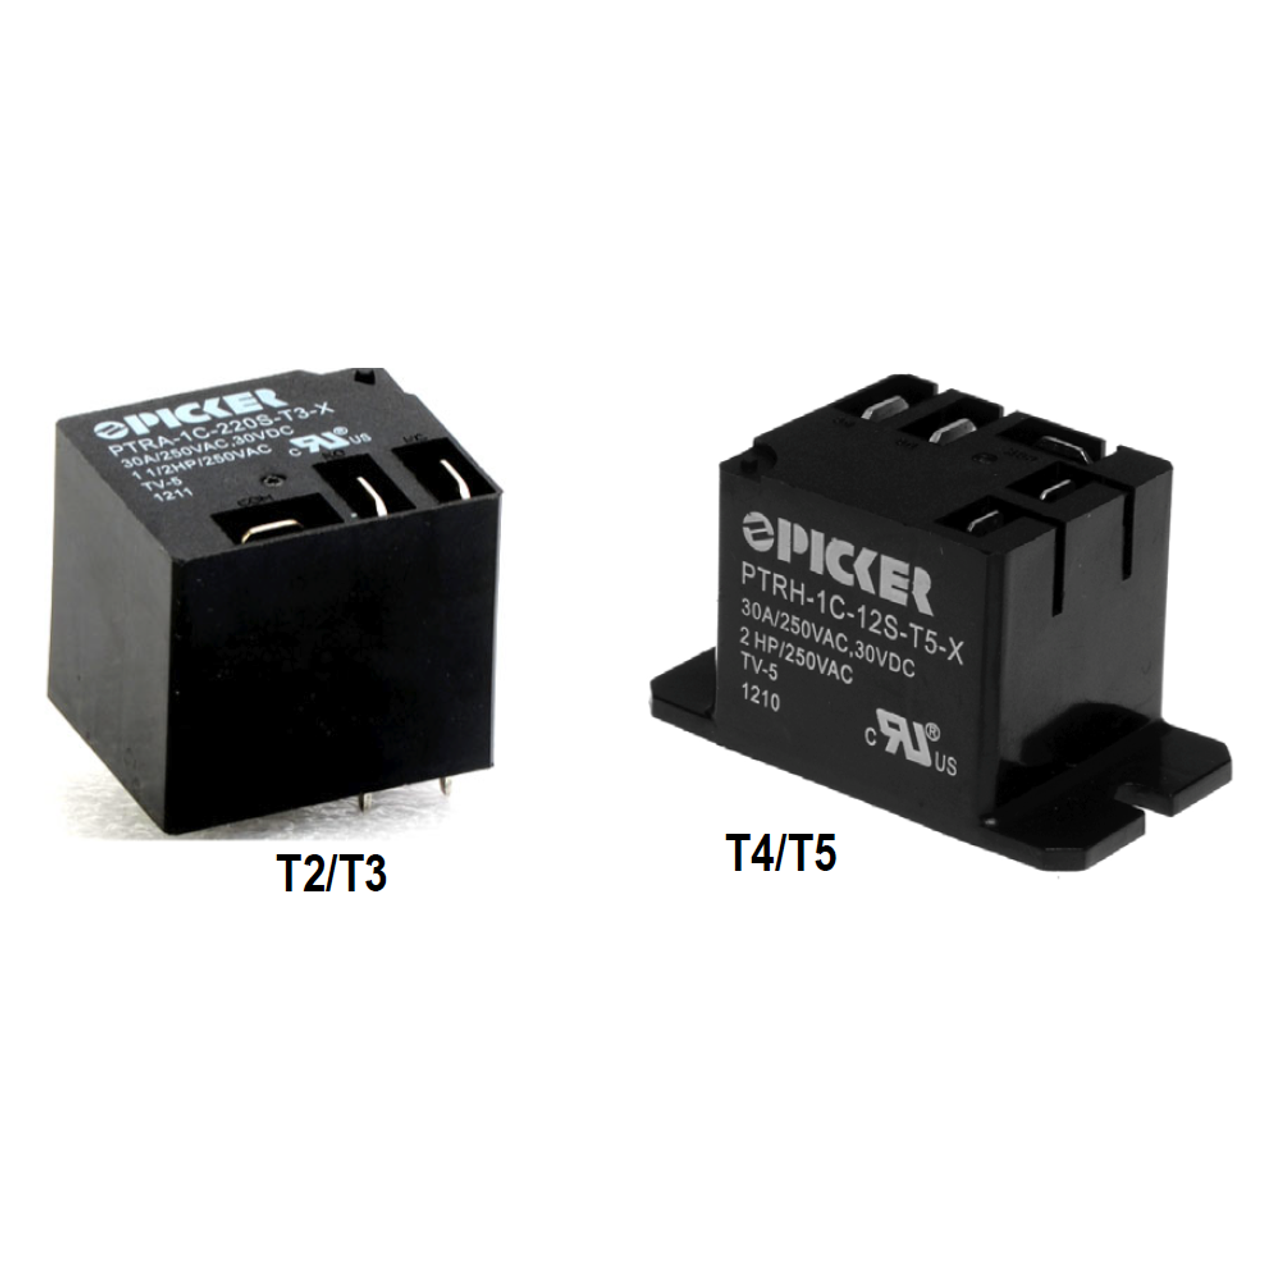 Picker PTRH-1C-110SF-T2-XA0.6 Power Relays